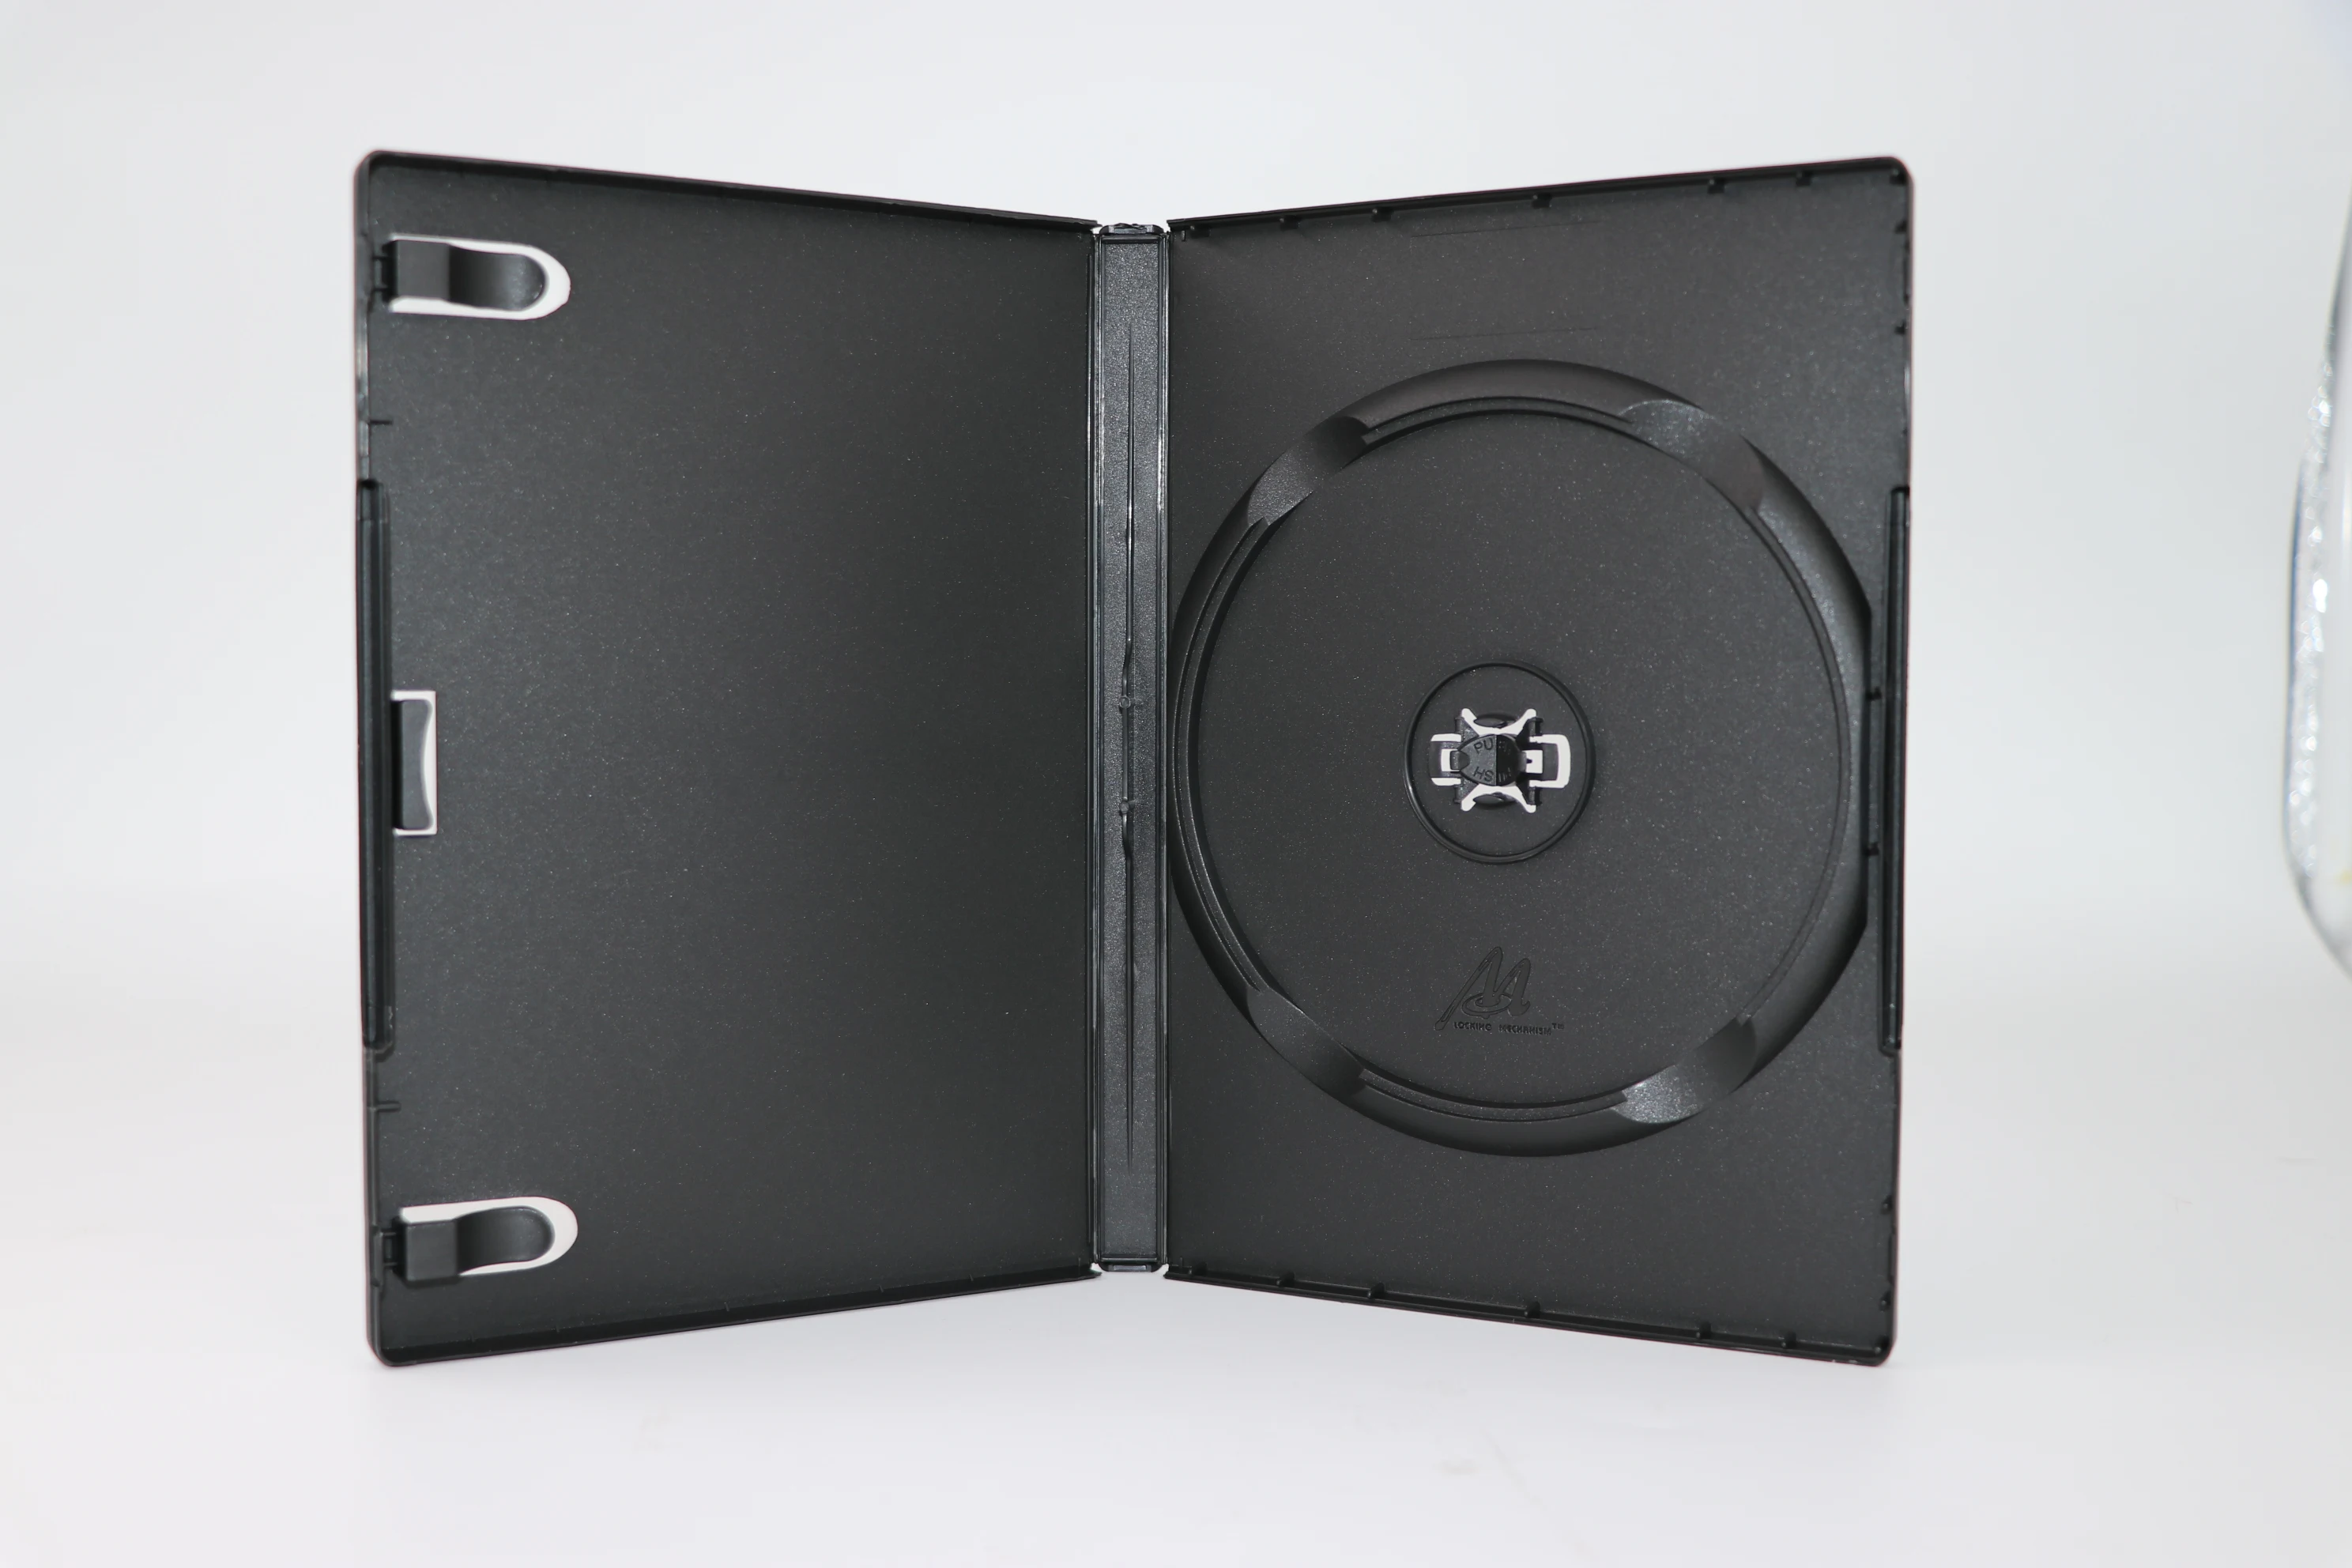 20 Standard 14mm Single CD DVD Disc Black Movie Storage Case Box